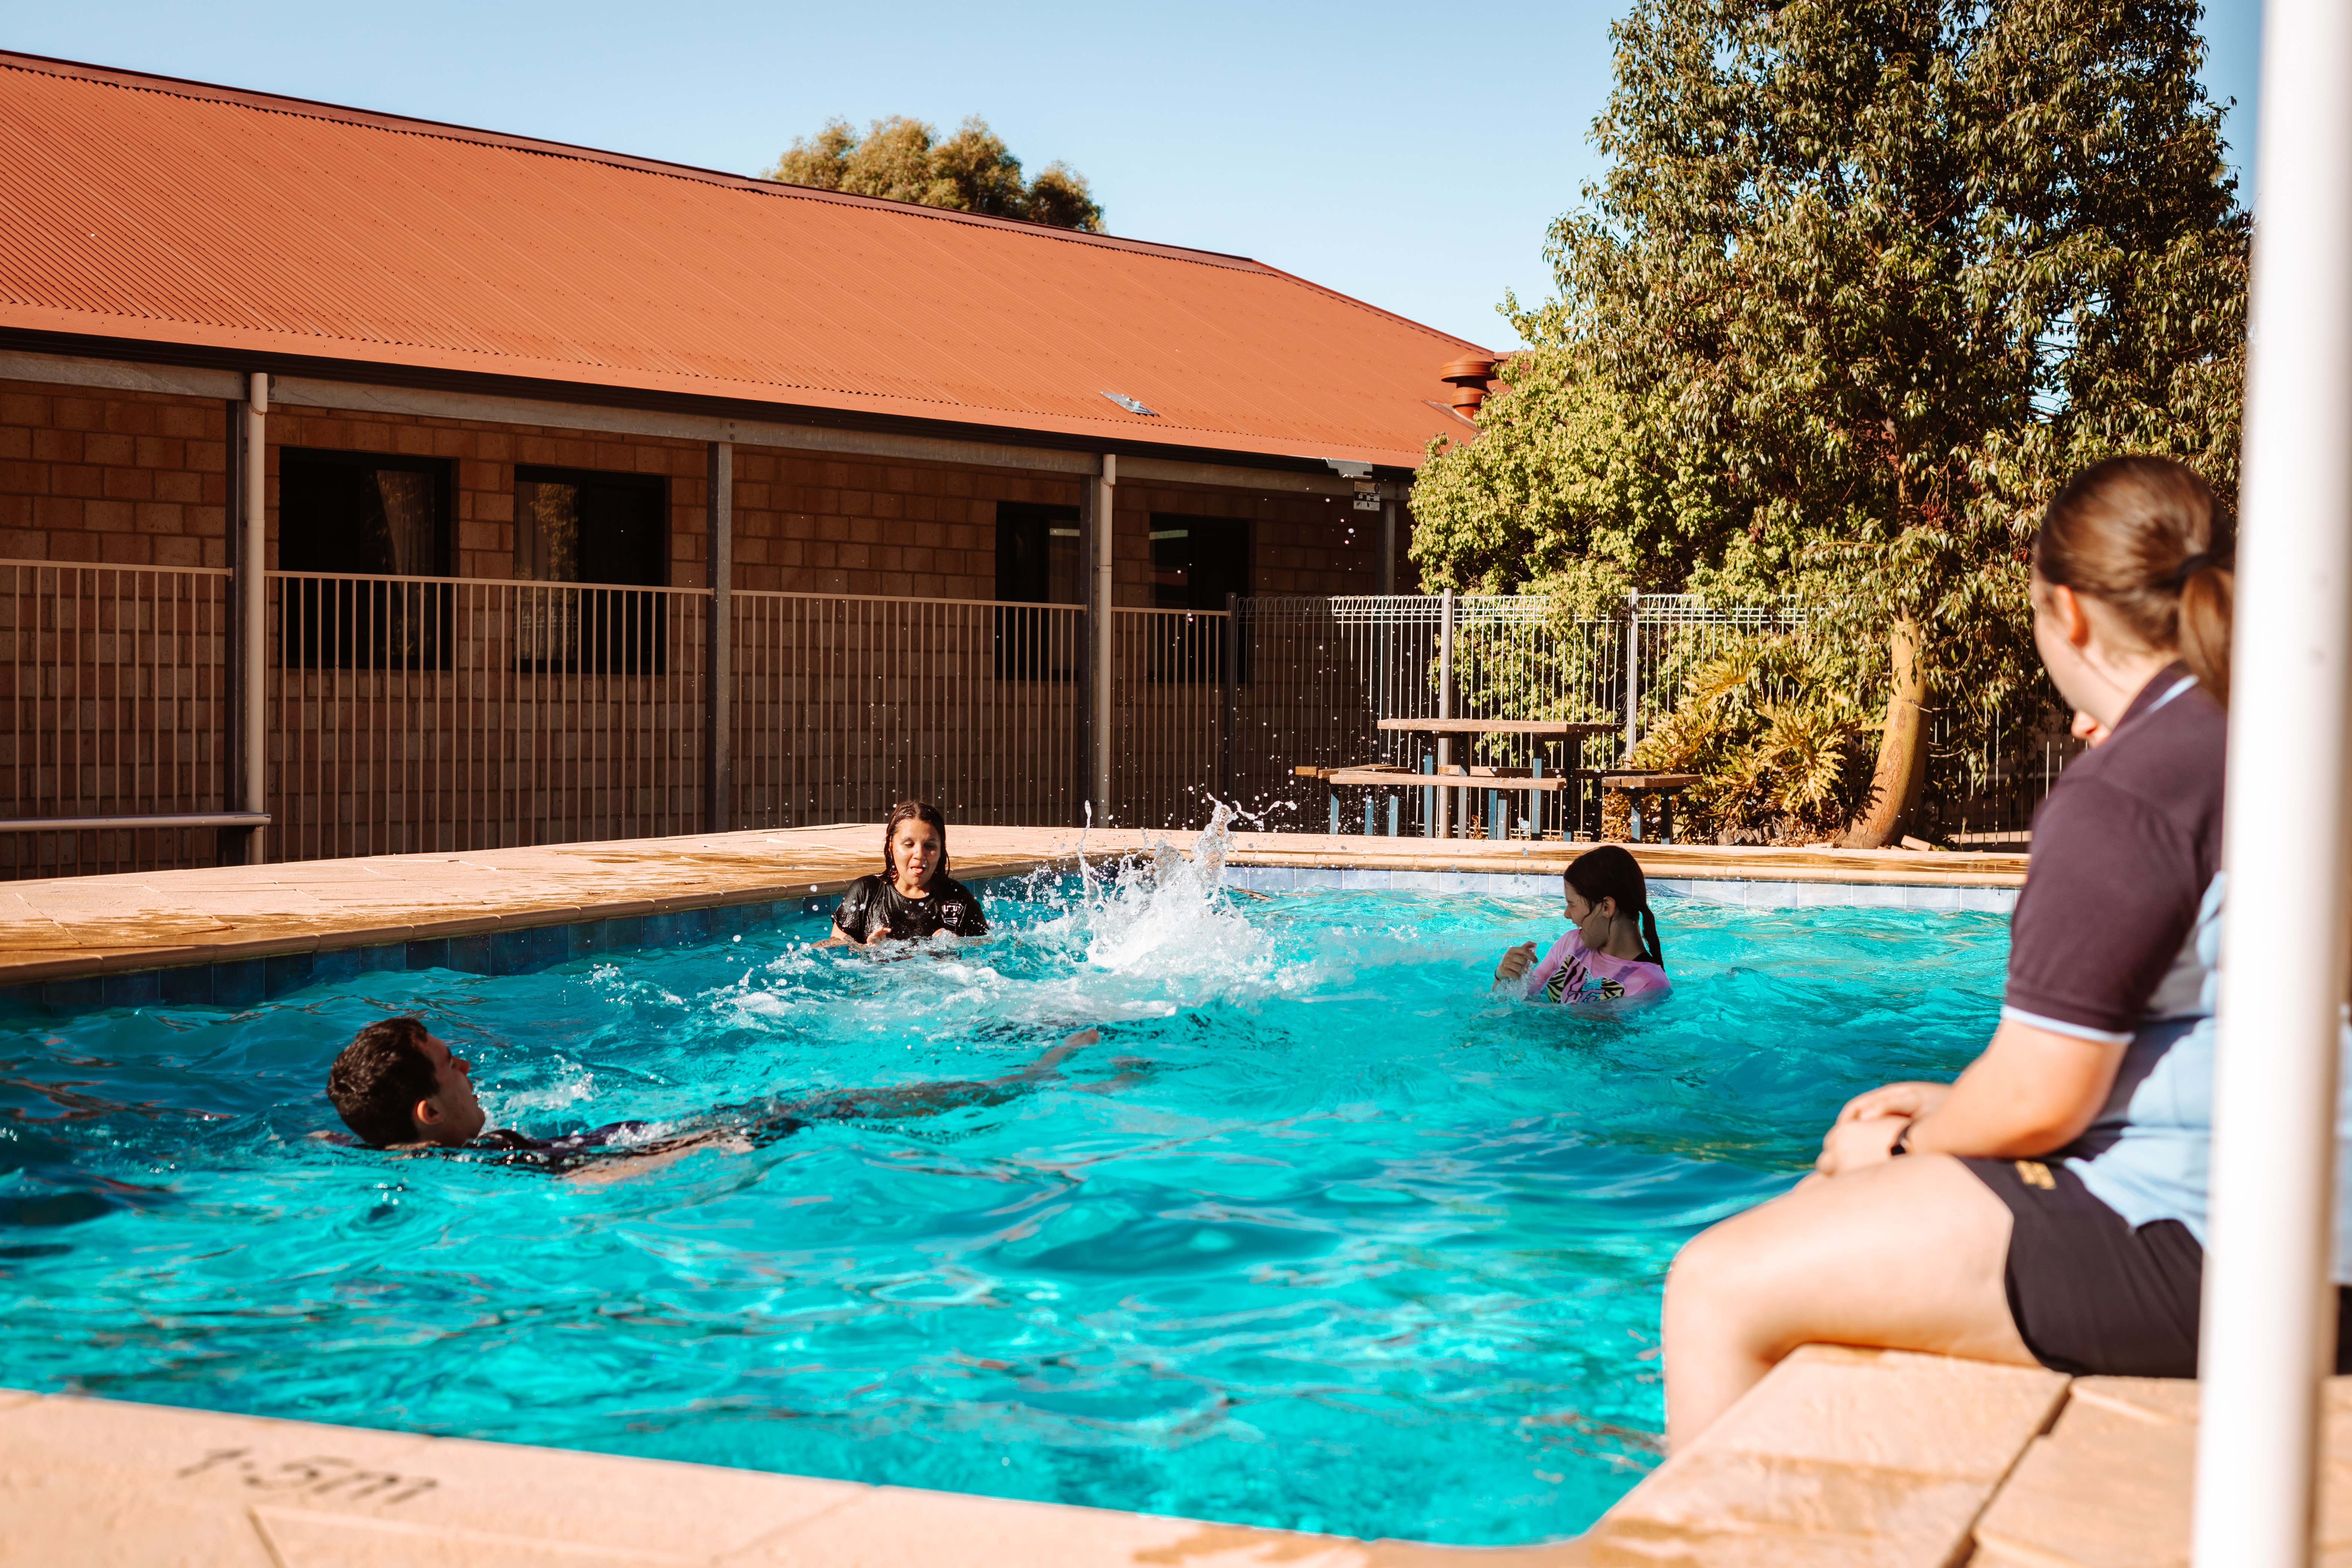 pic of Merredin residential college swimming pool